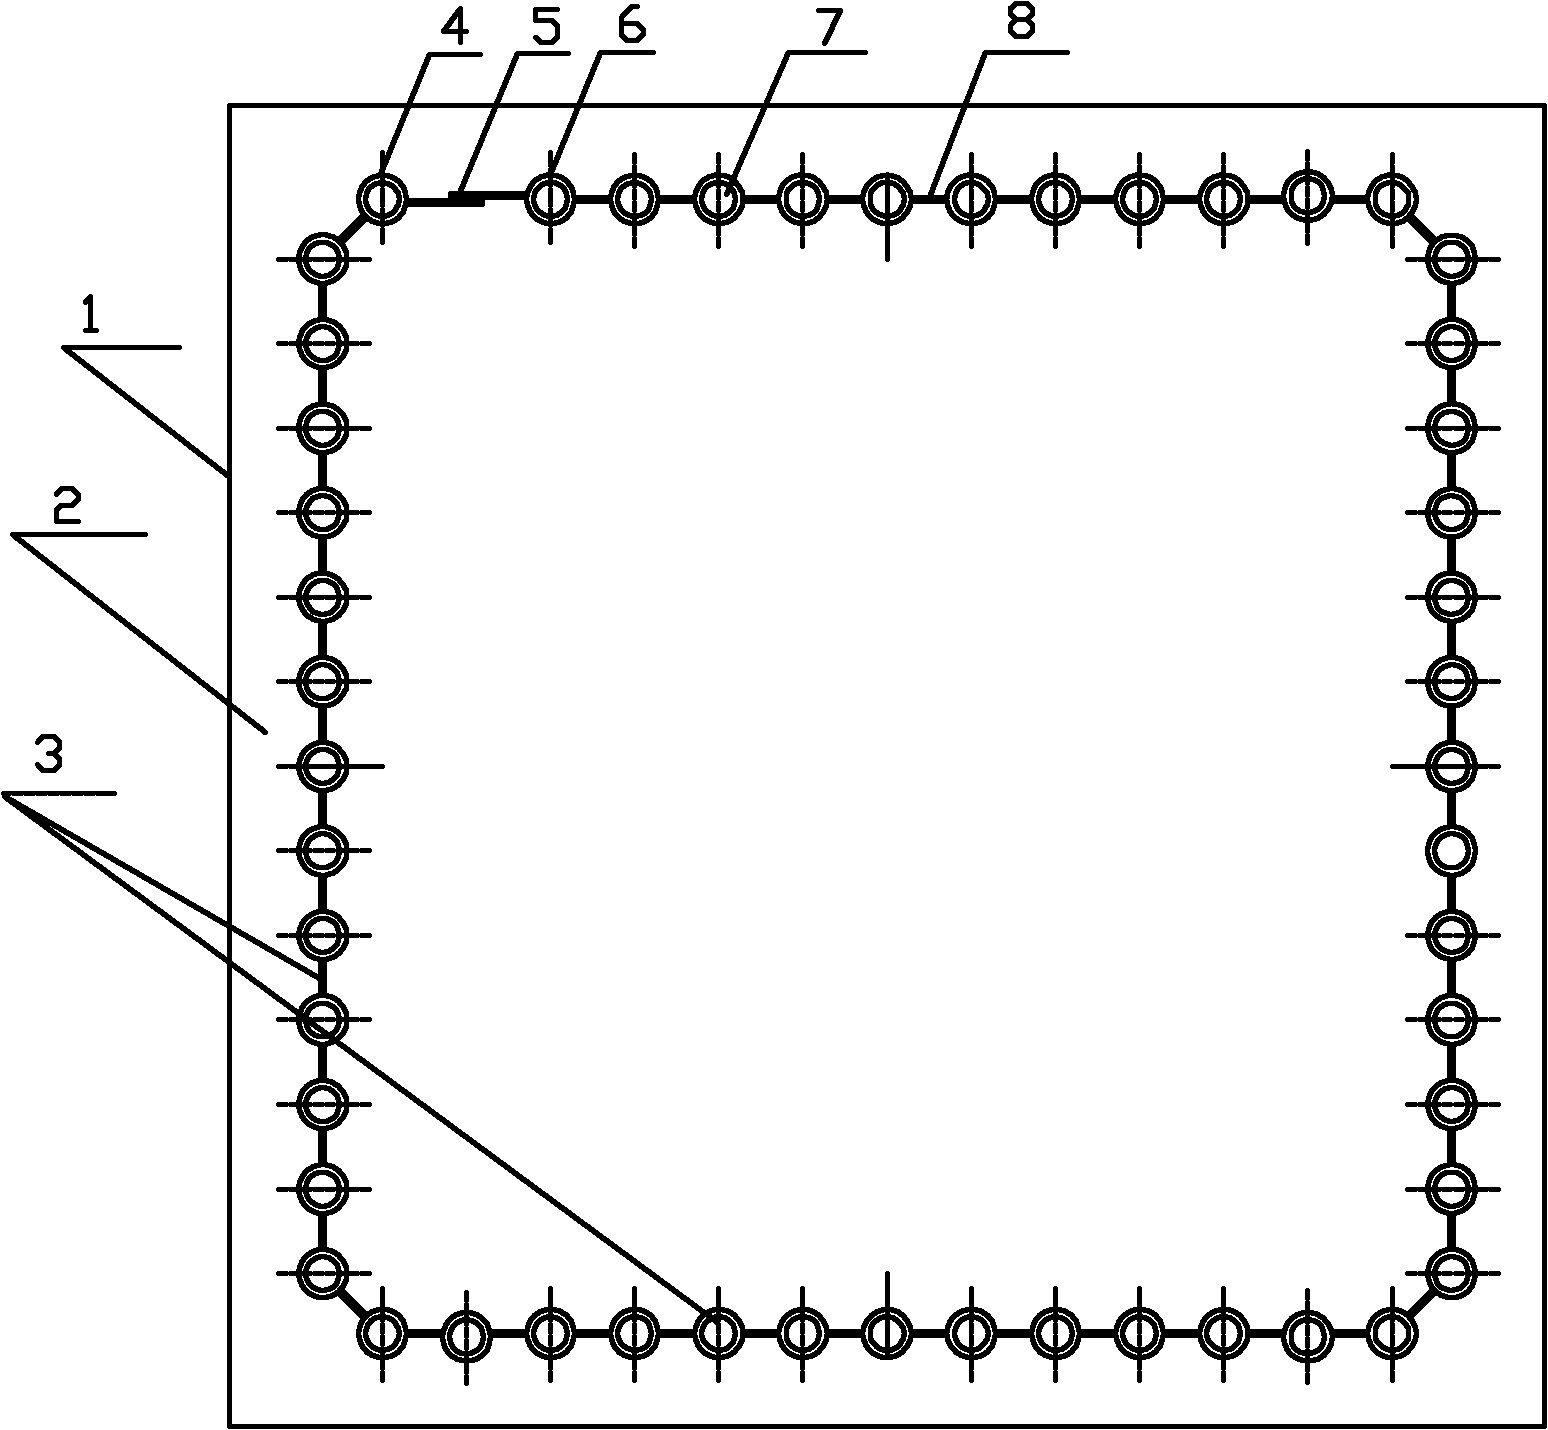 Horizontal boiler radiation segment structure